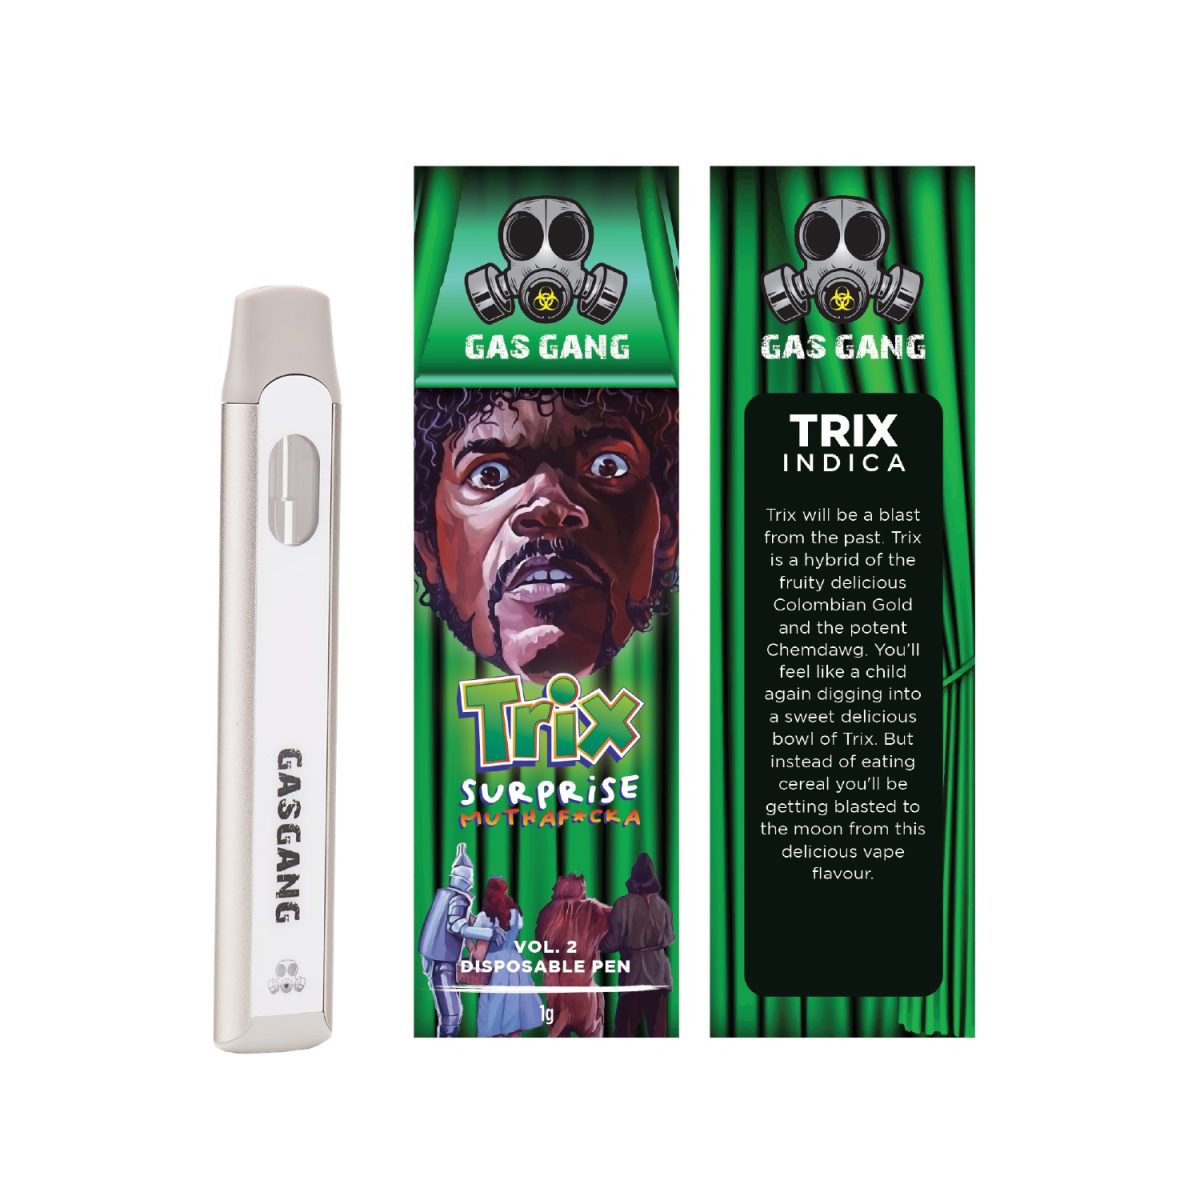 Buy Gas Gang – Trix Disposable Pen (INDICA) at MMJ Express Online Shop